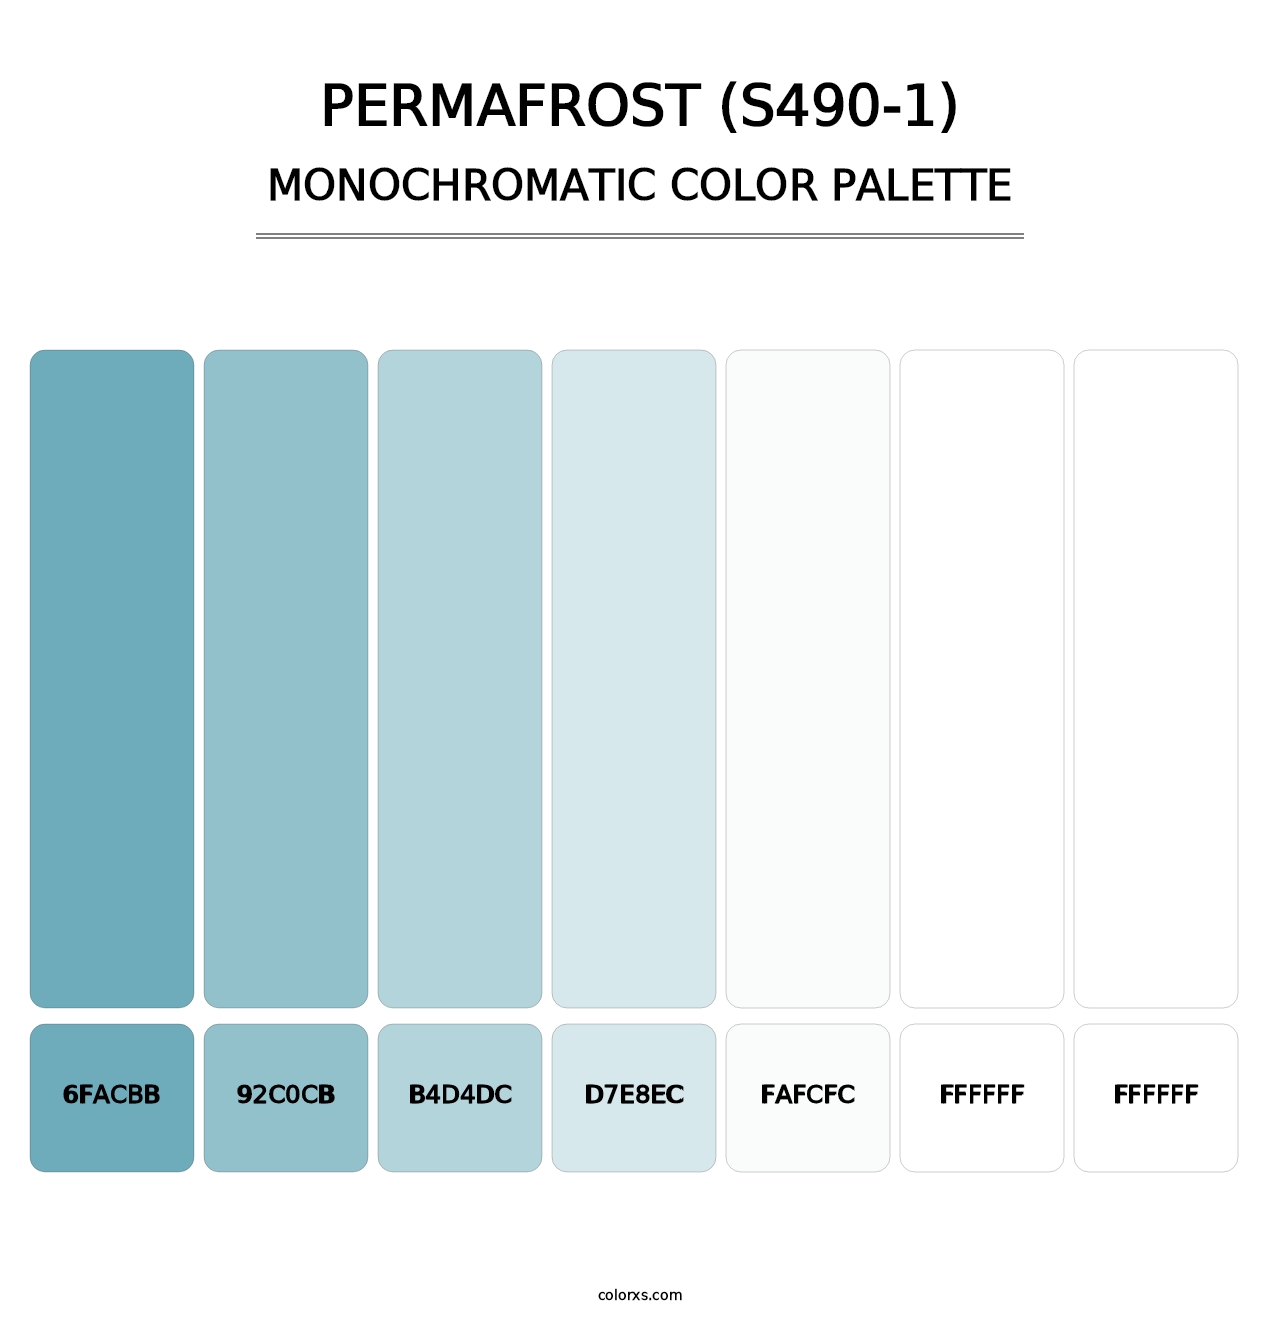 Permafrost (S490-1) - Monochromatic Color Palette